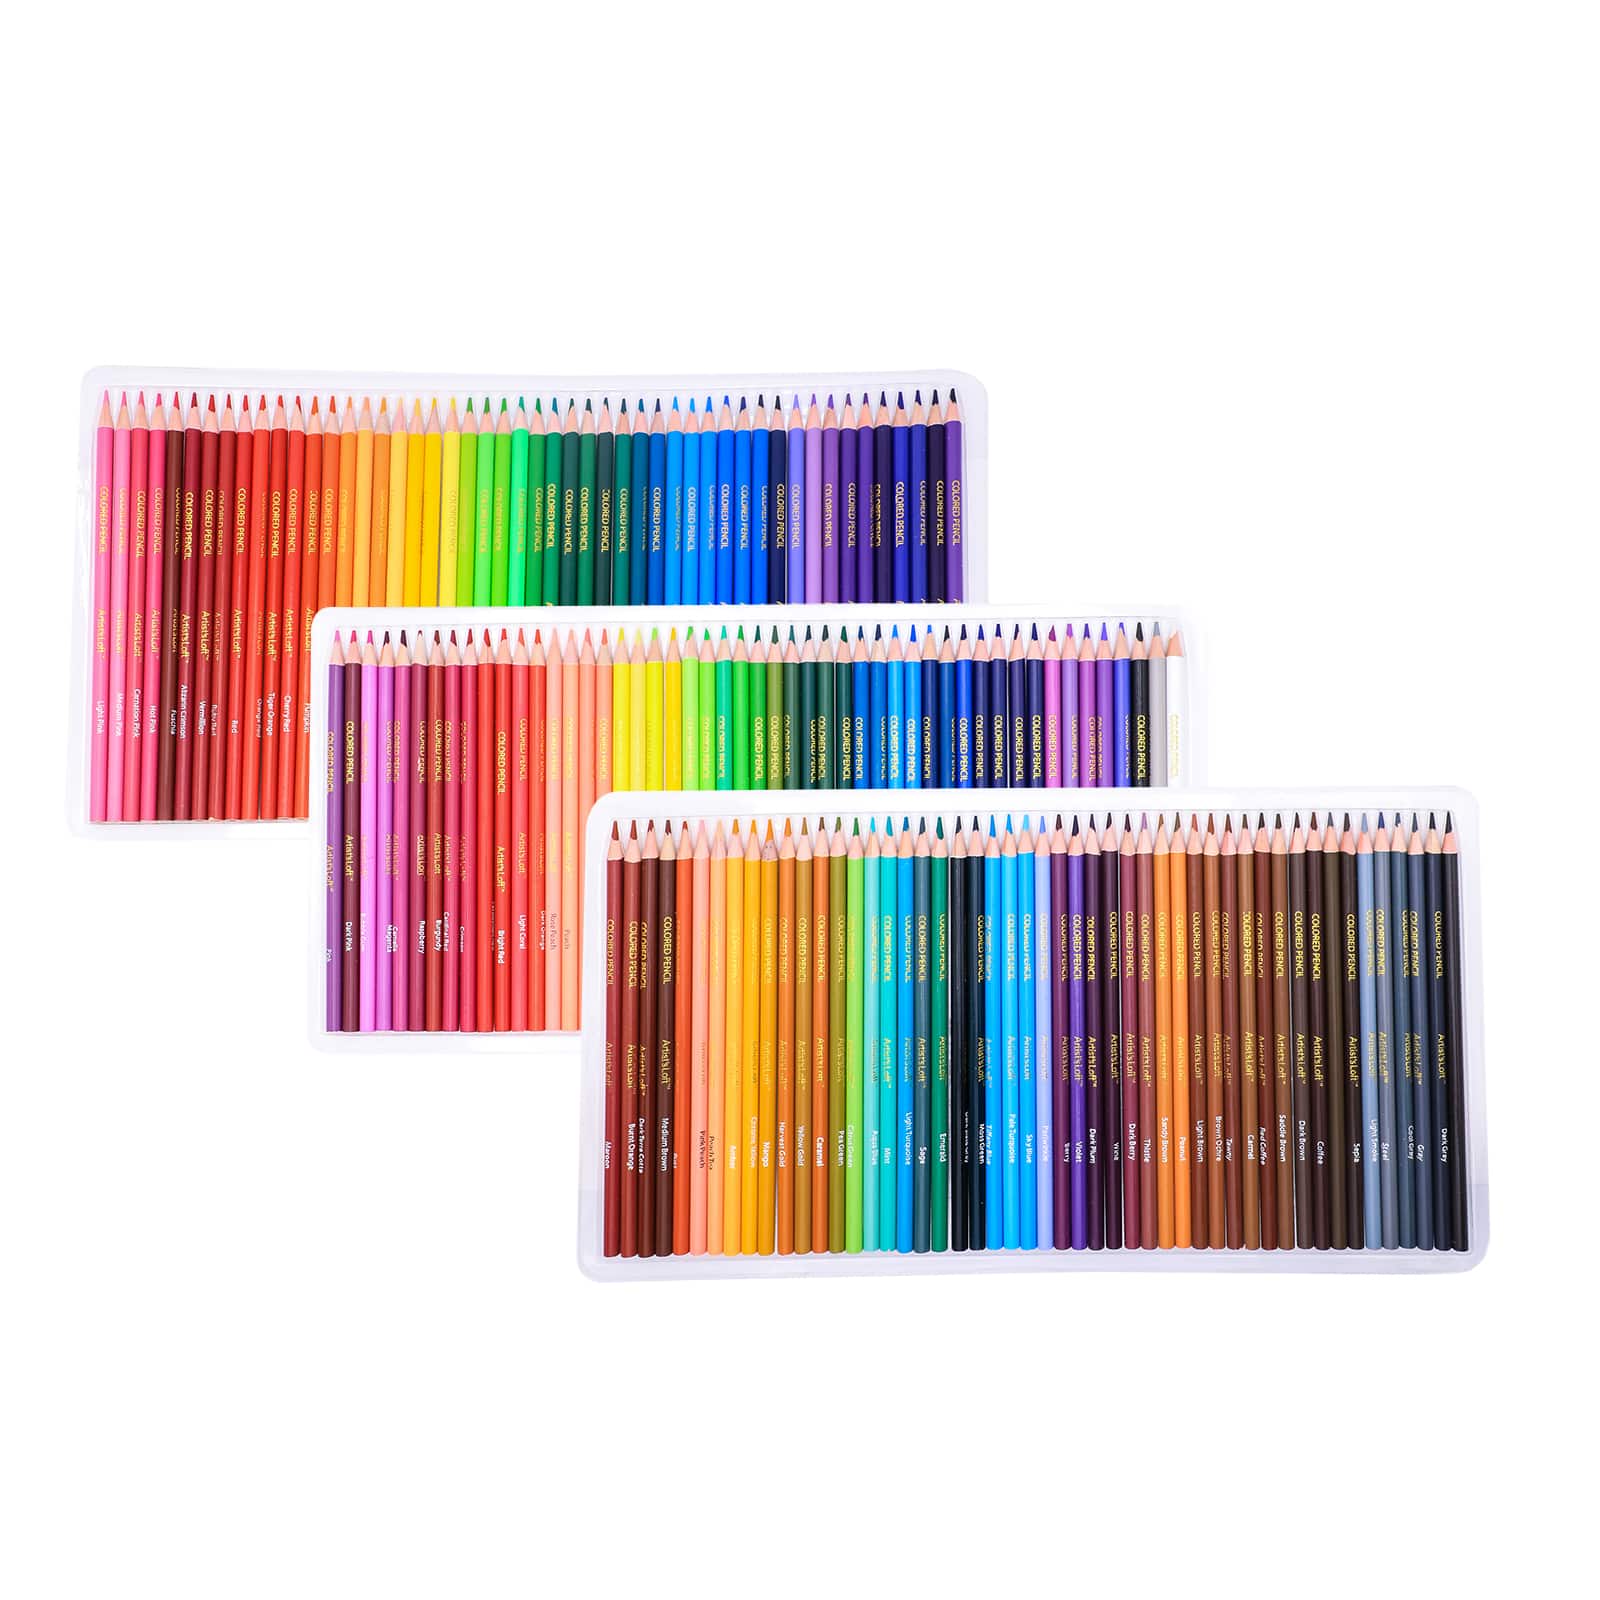  Artist's Loft Colored Pencils, 24 Count : Arts